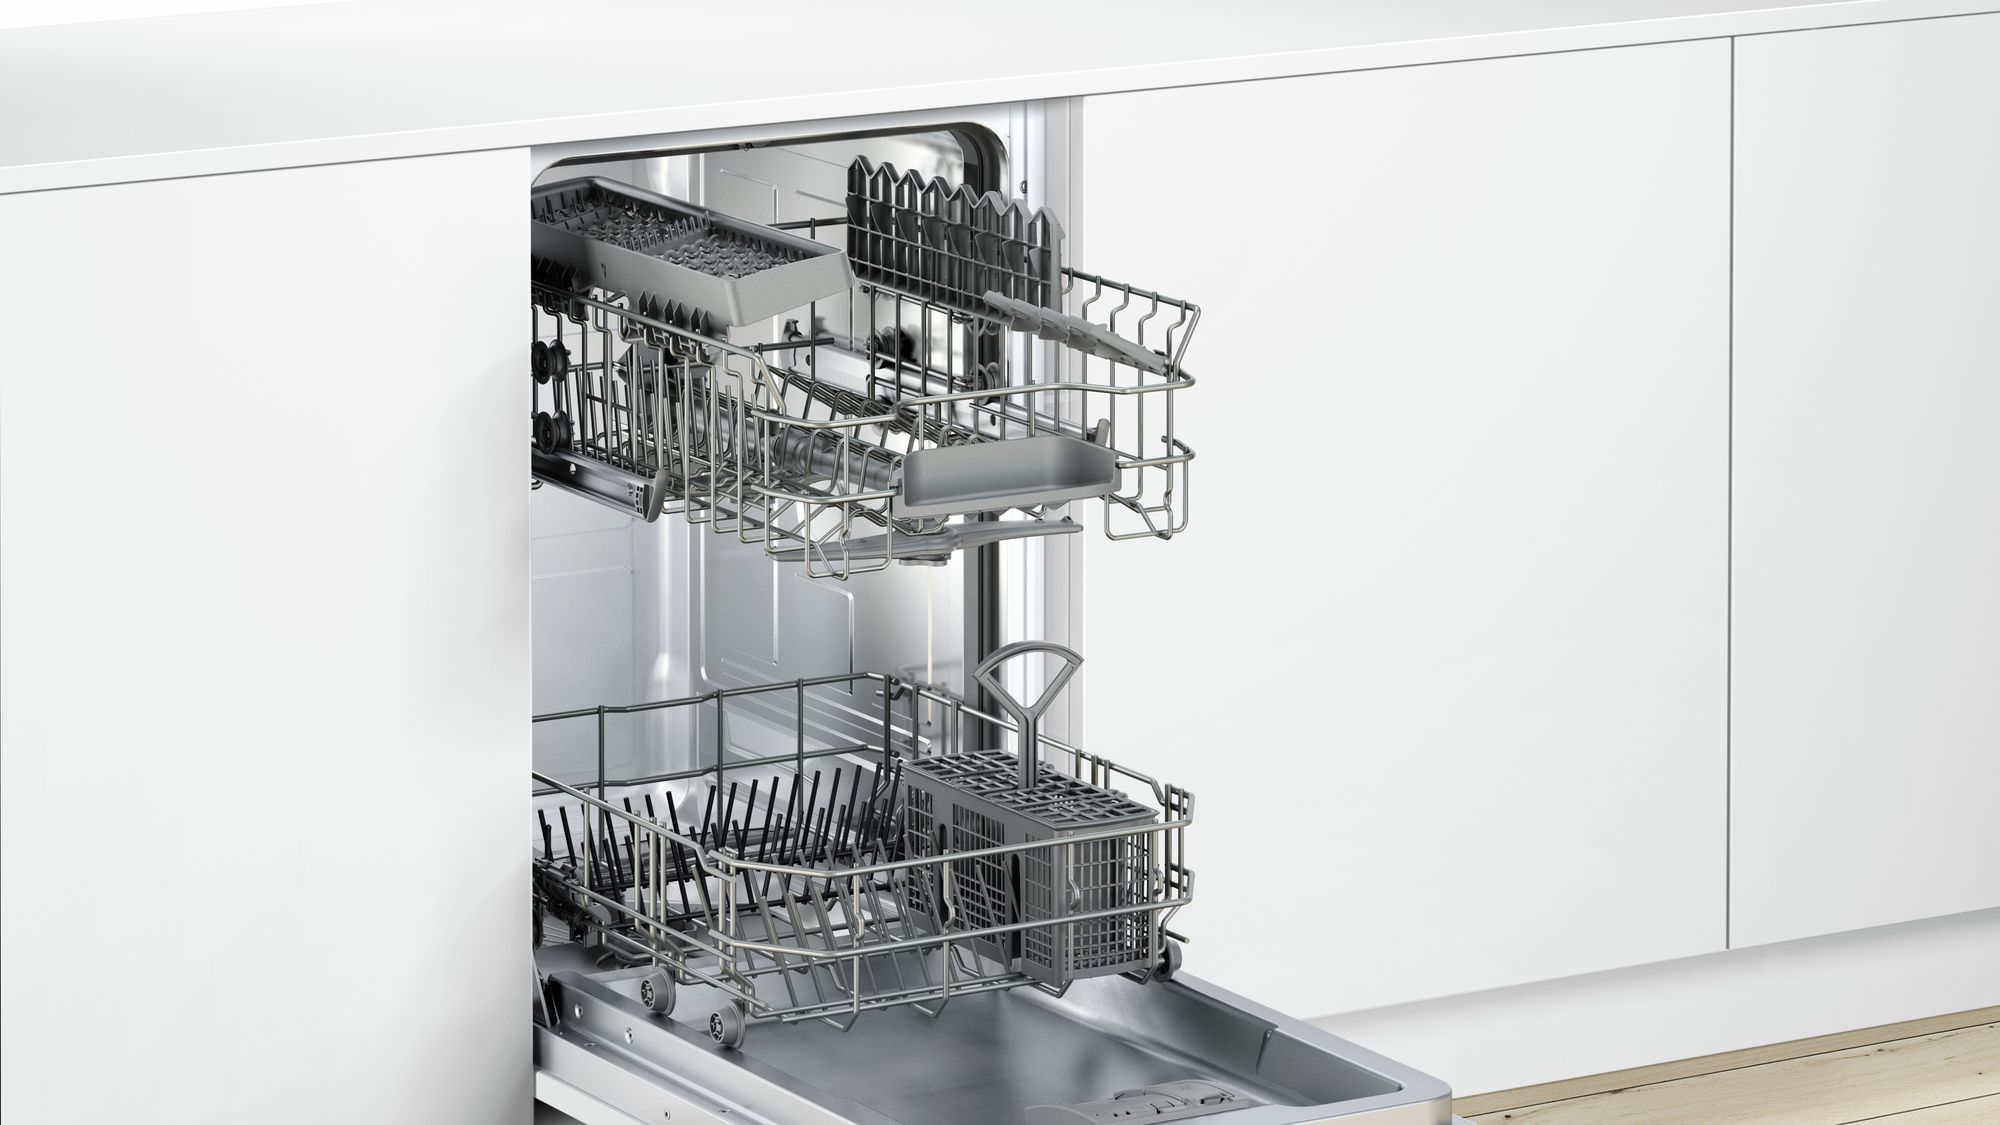 картинка Посудомоечная машина Neff S581C50X1R от интернет-магазина exklusiv-bt